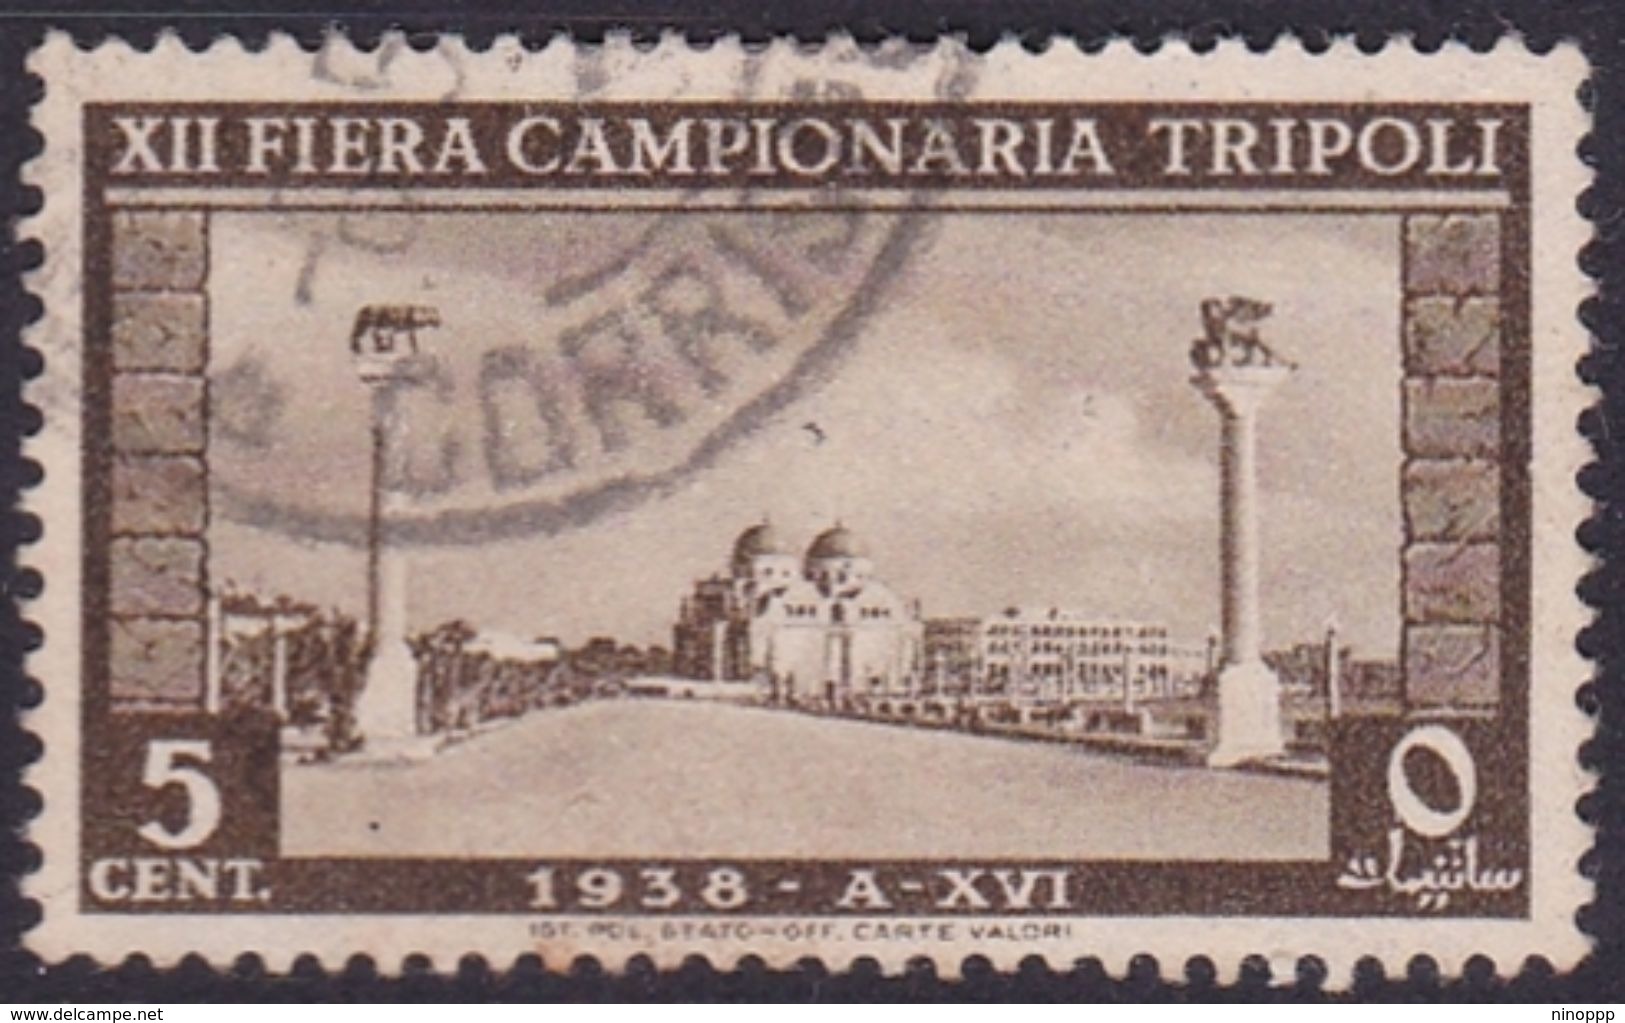 Italy-Colonies And Territories-Libya S 146 1938 12th Tripoli Fair,5c Brown,used - Libya